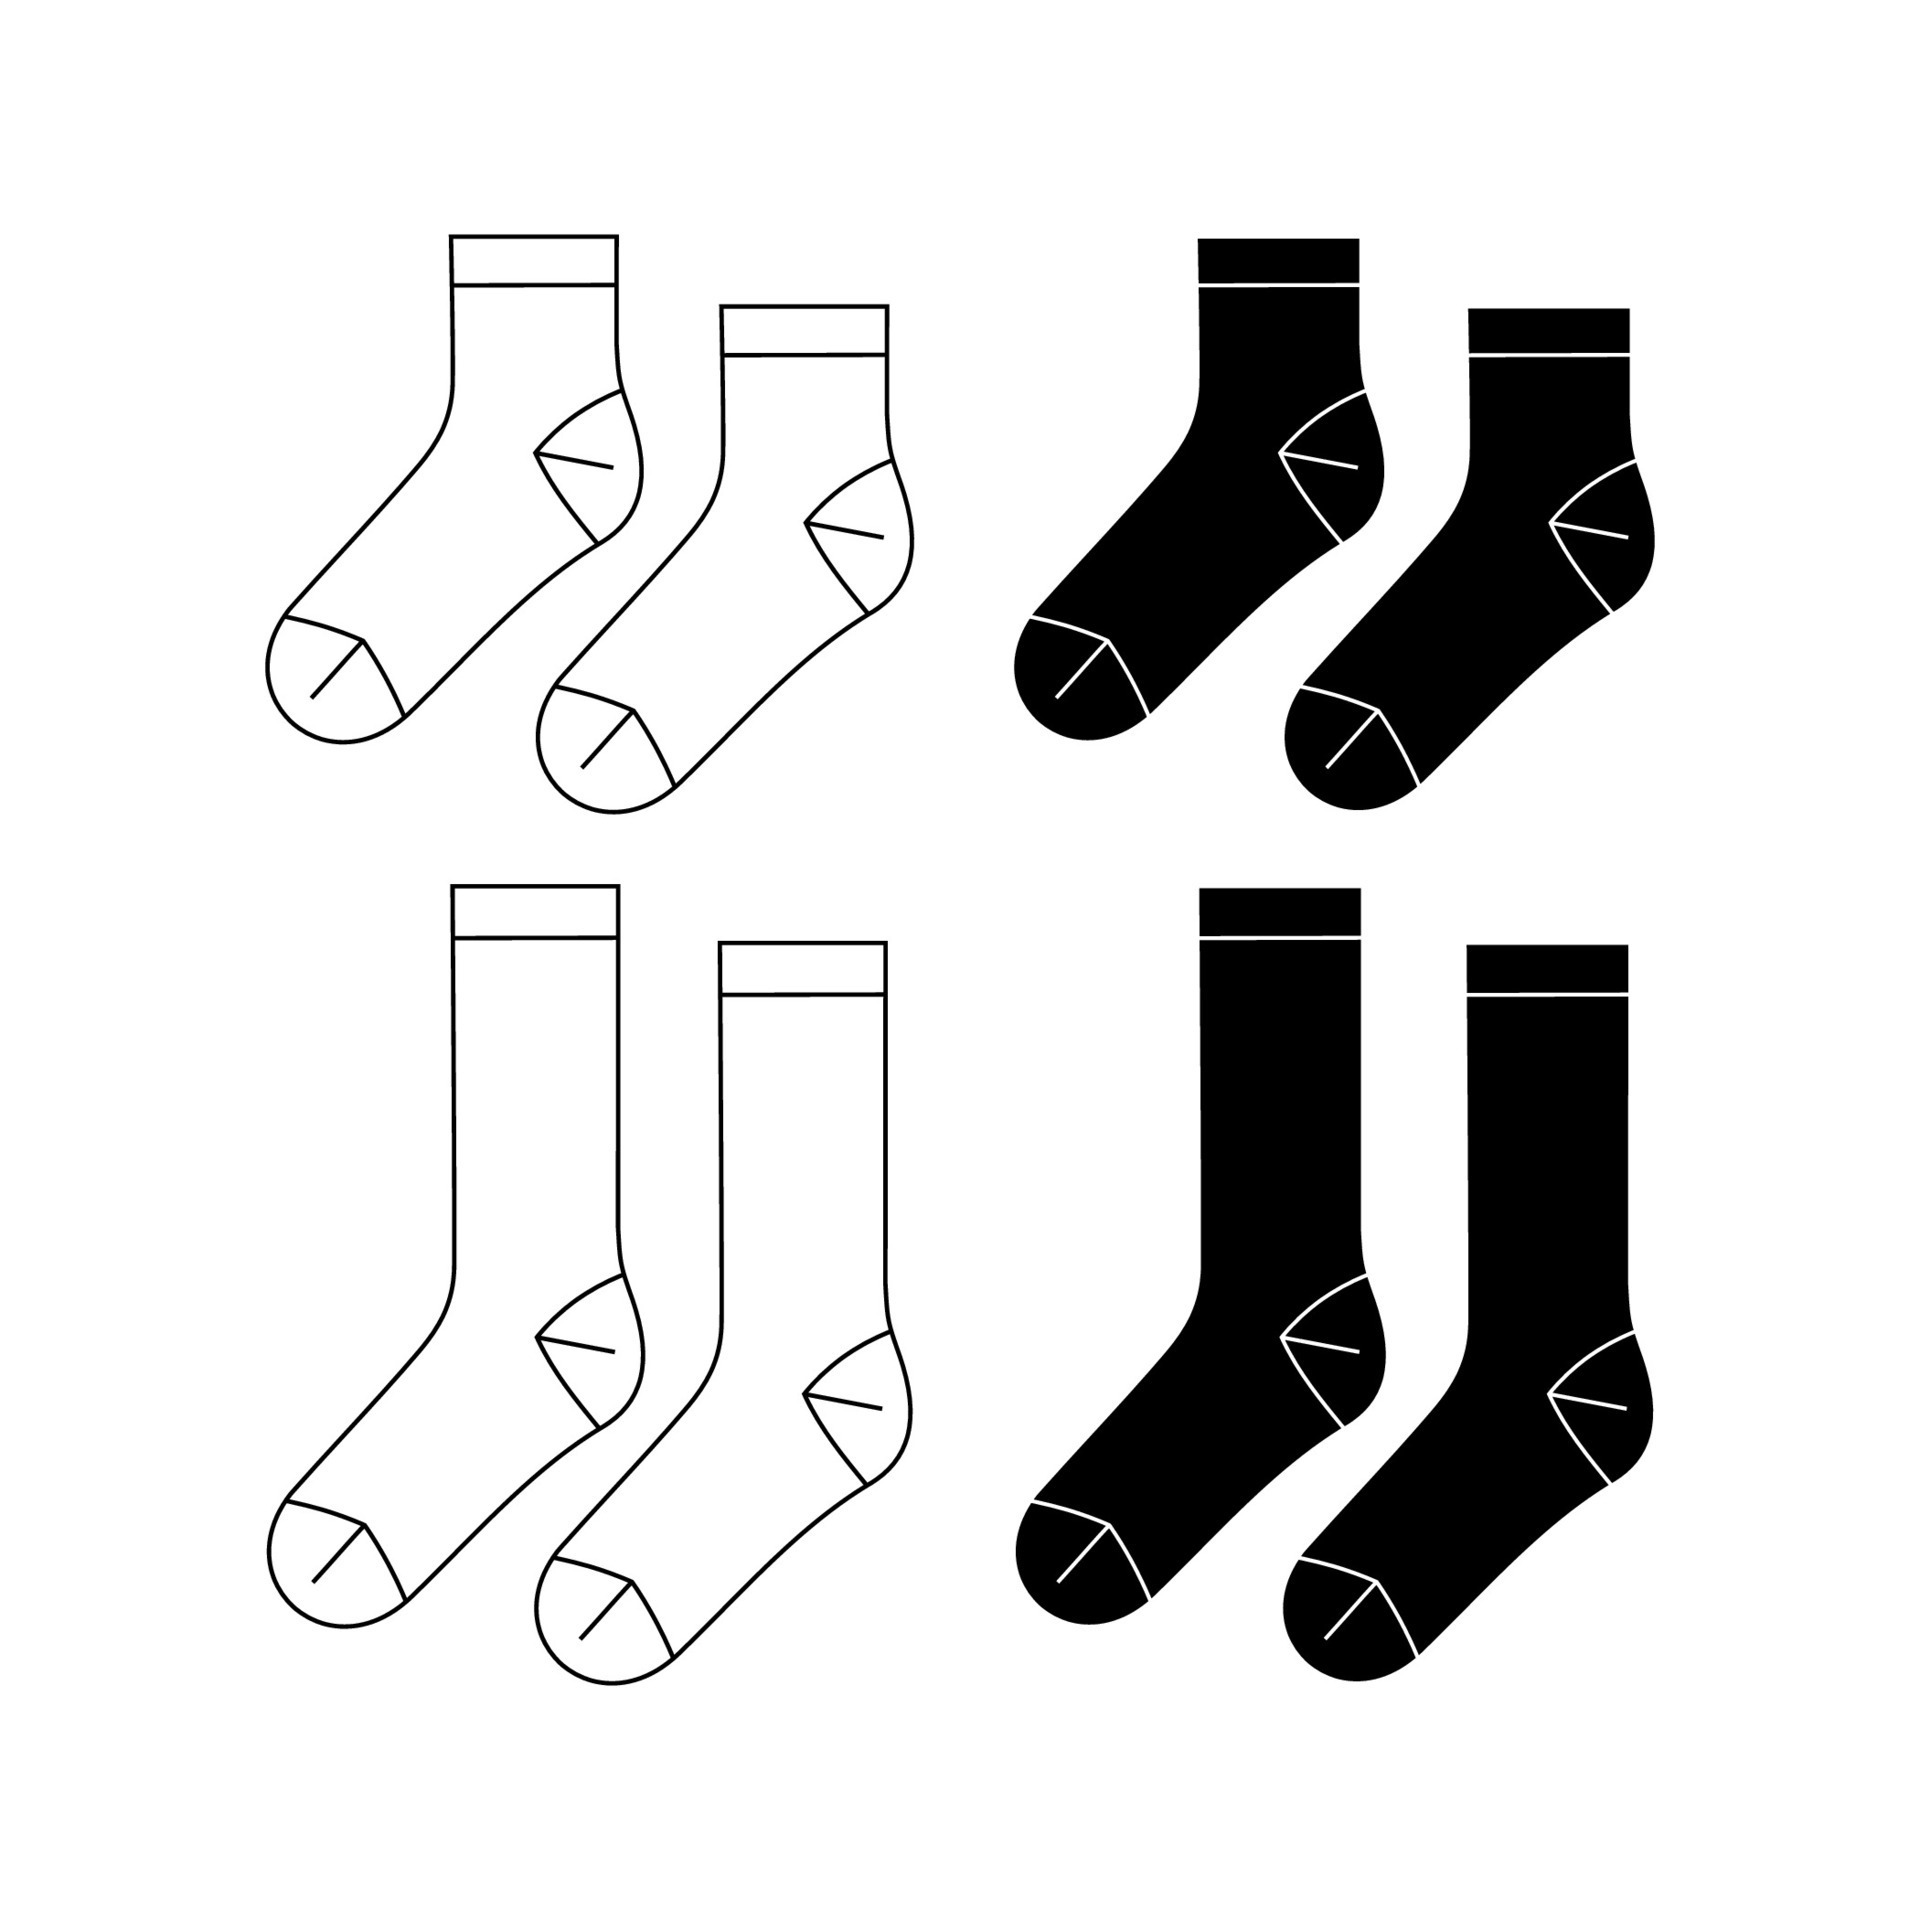 Set of Mid Calf length Socks flat sketch fashion illustration drawing  template mock up, Calf length socks cad drawing for unisex men's and  women's, Quarter crew socks design drawing 34964842 Vector Art